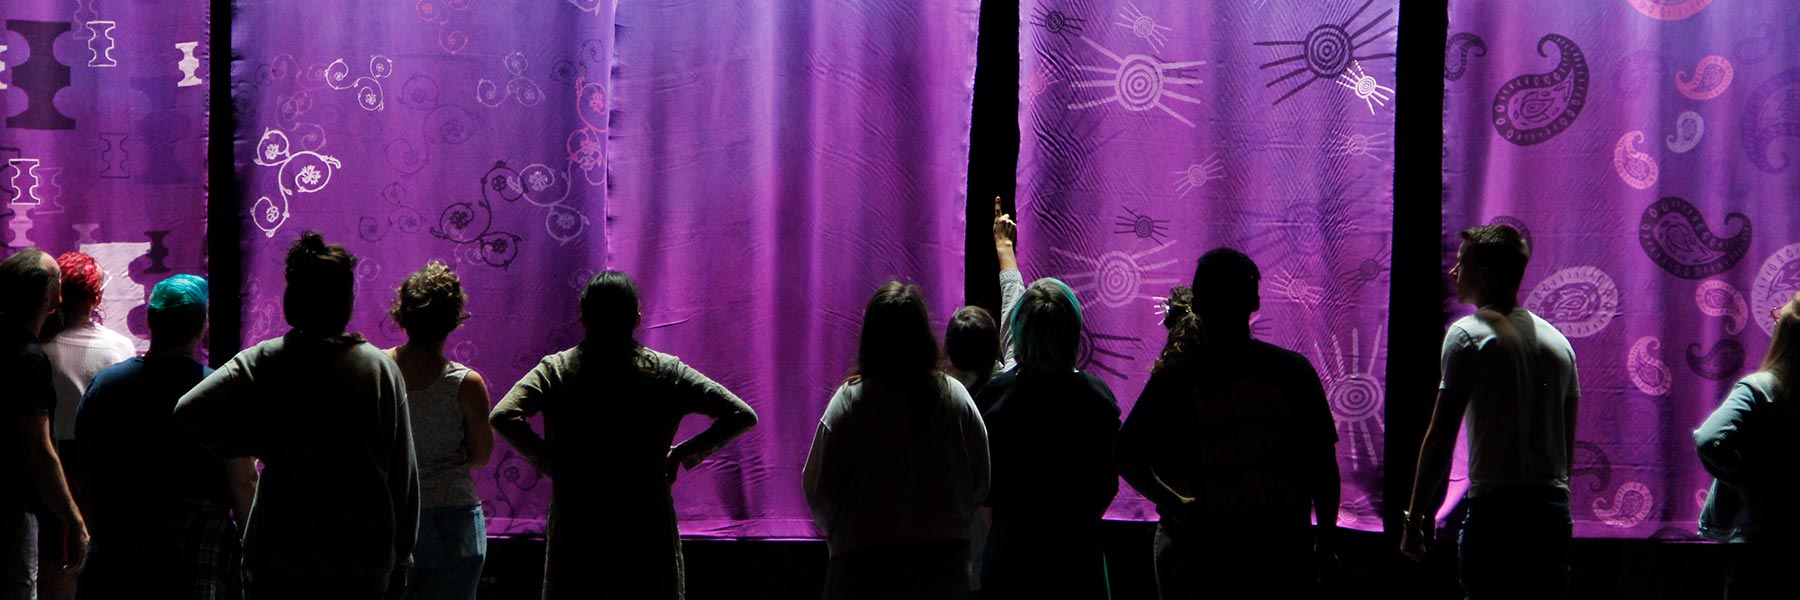 People look at purple artwork on a dark wall.